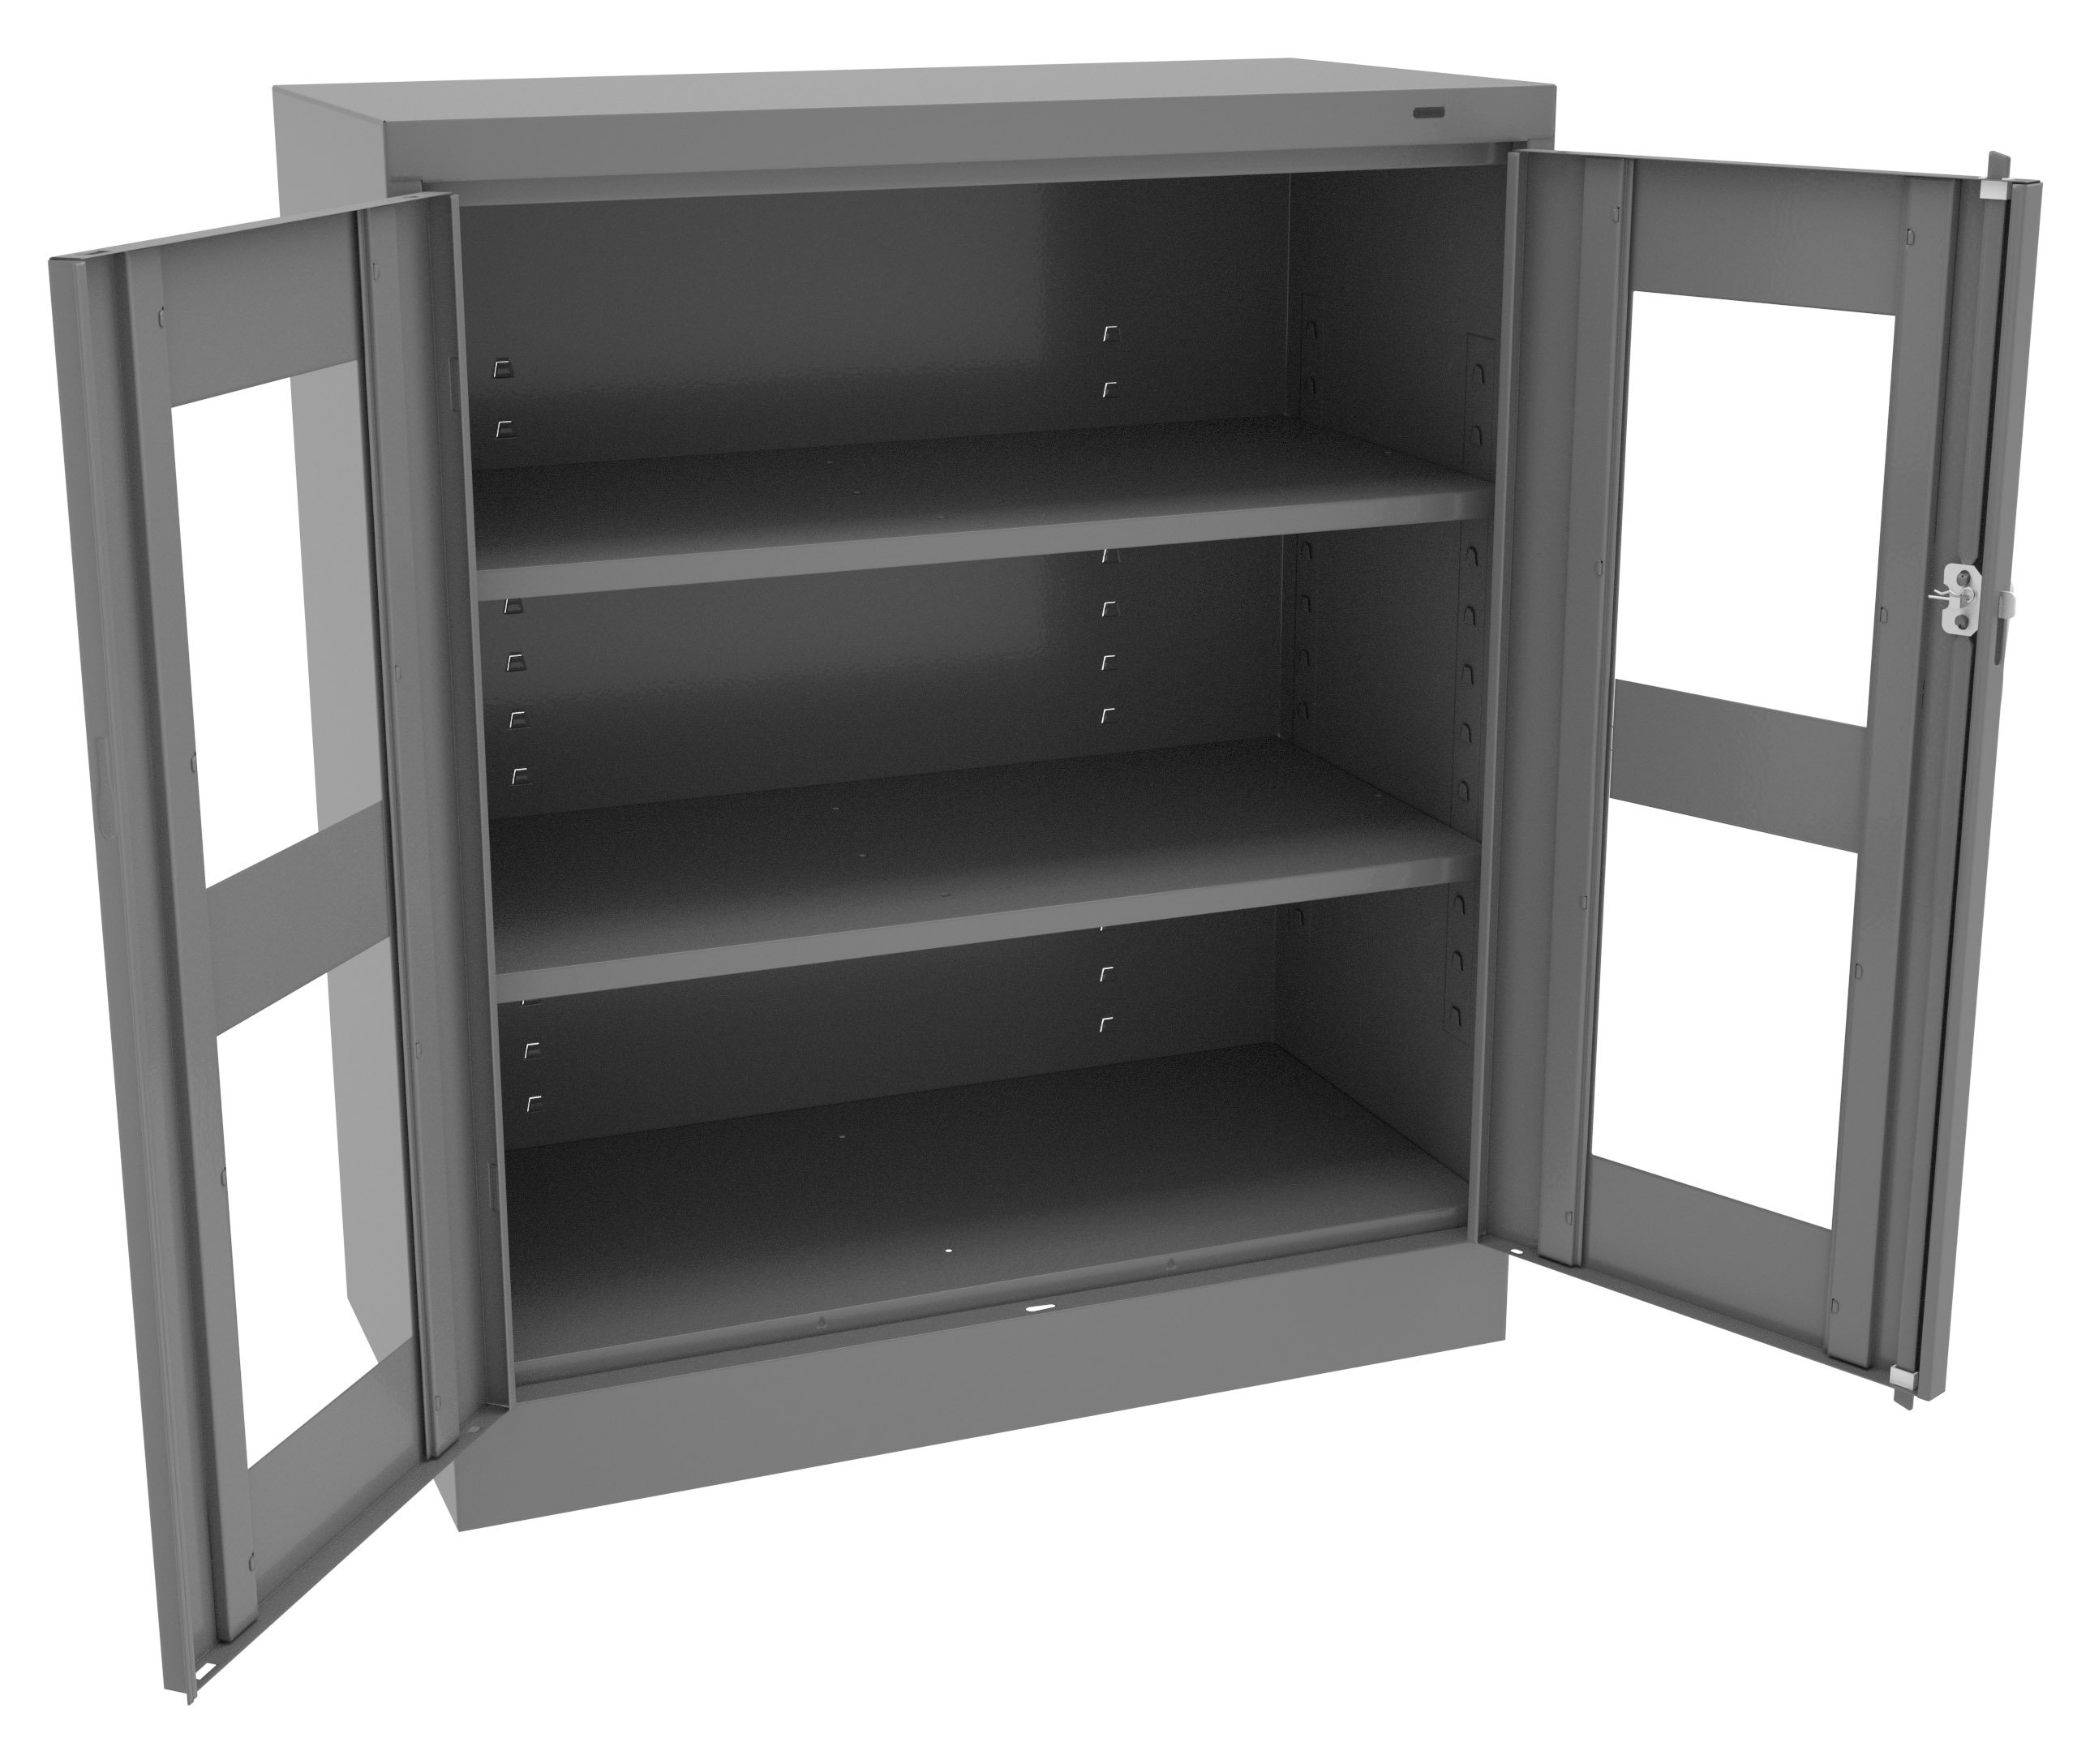 Woen 2 - Shelf Storage Cabinet The Twillery Co. Finish: White